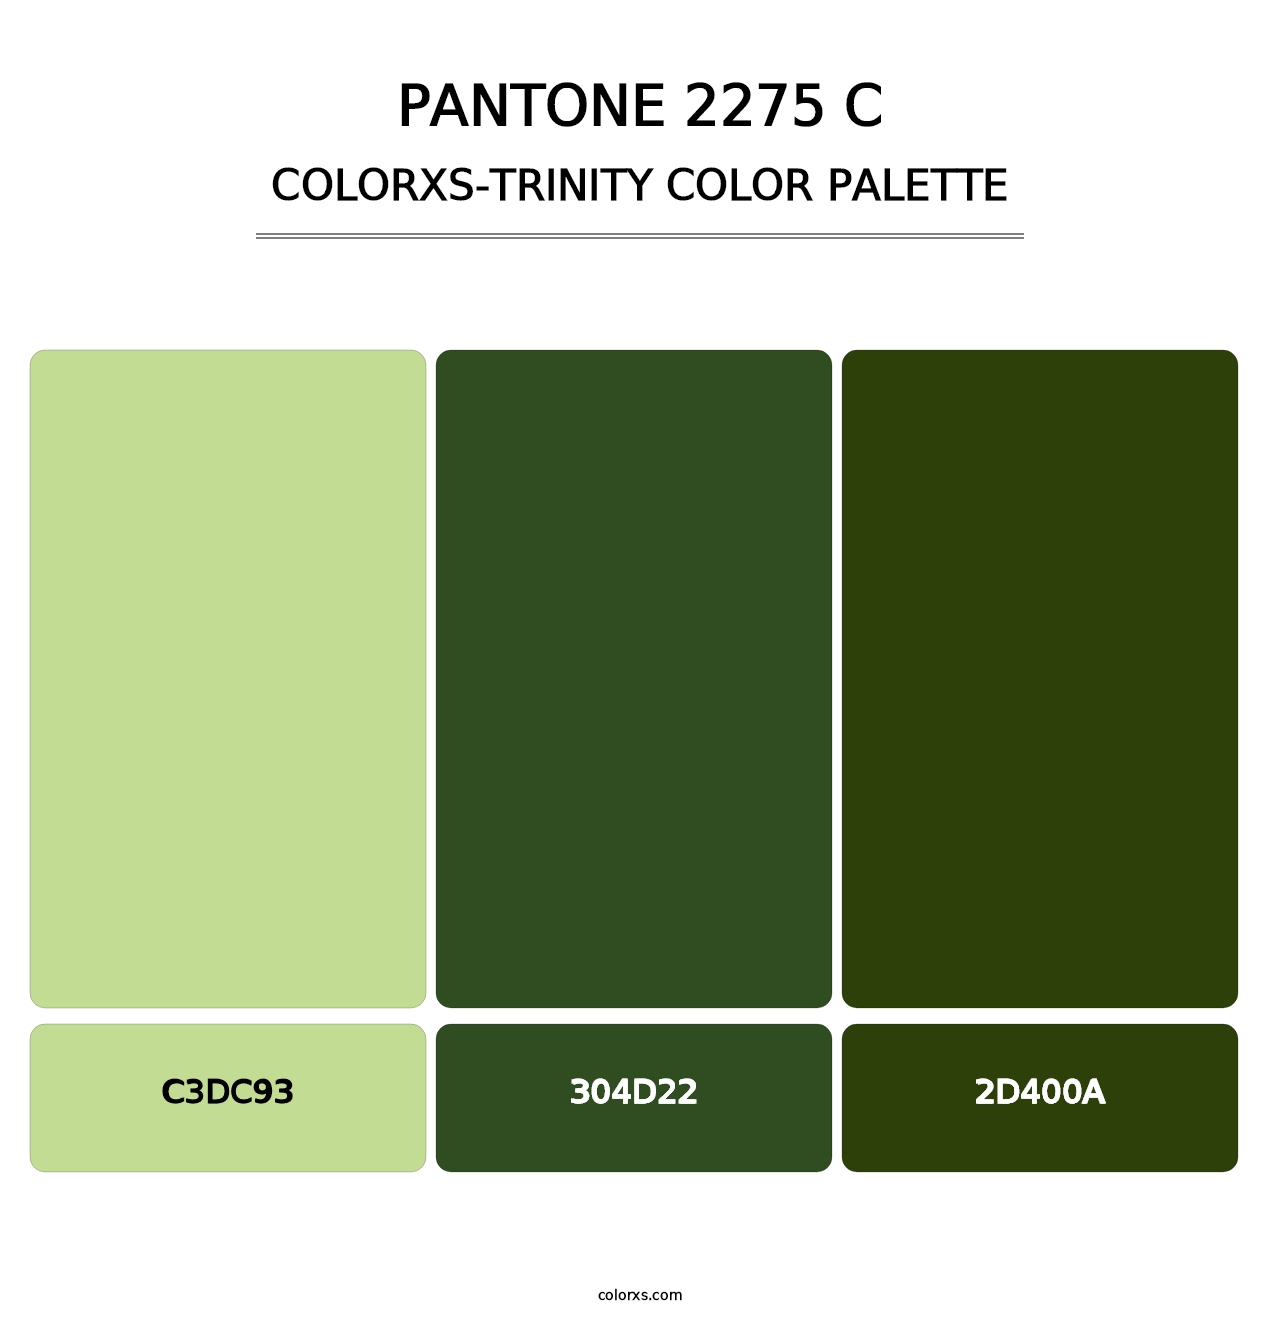 PANTONE 2275 C - Colorxs Trinity Palette